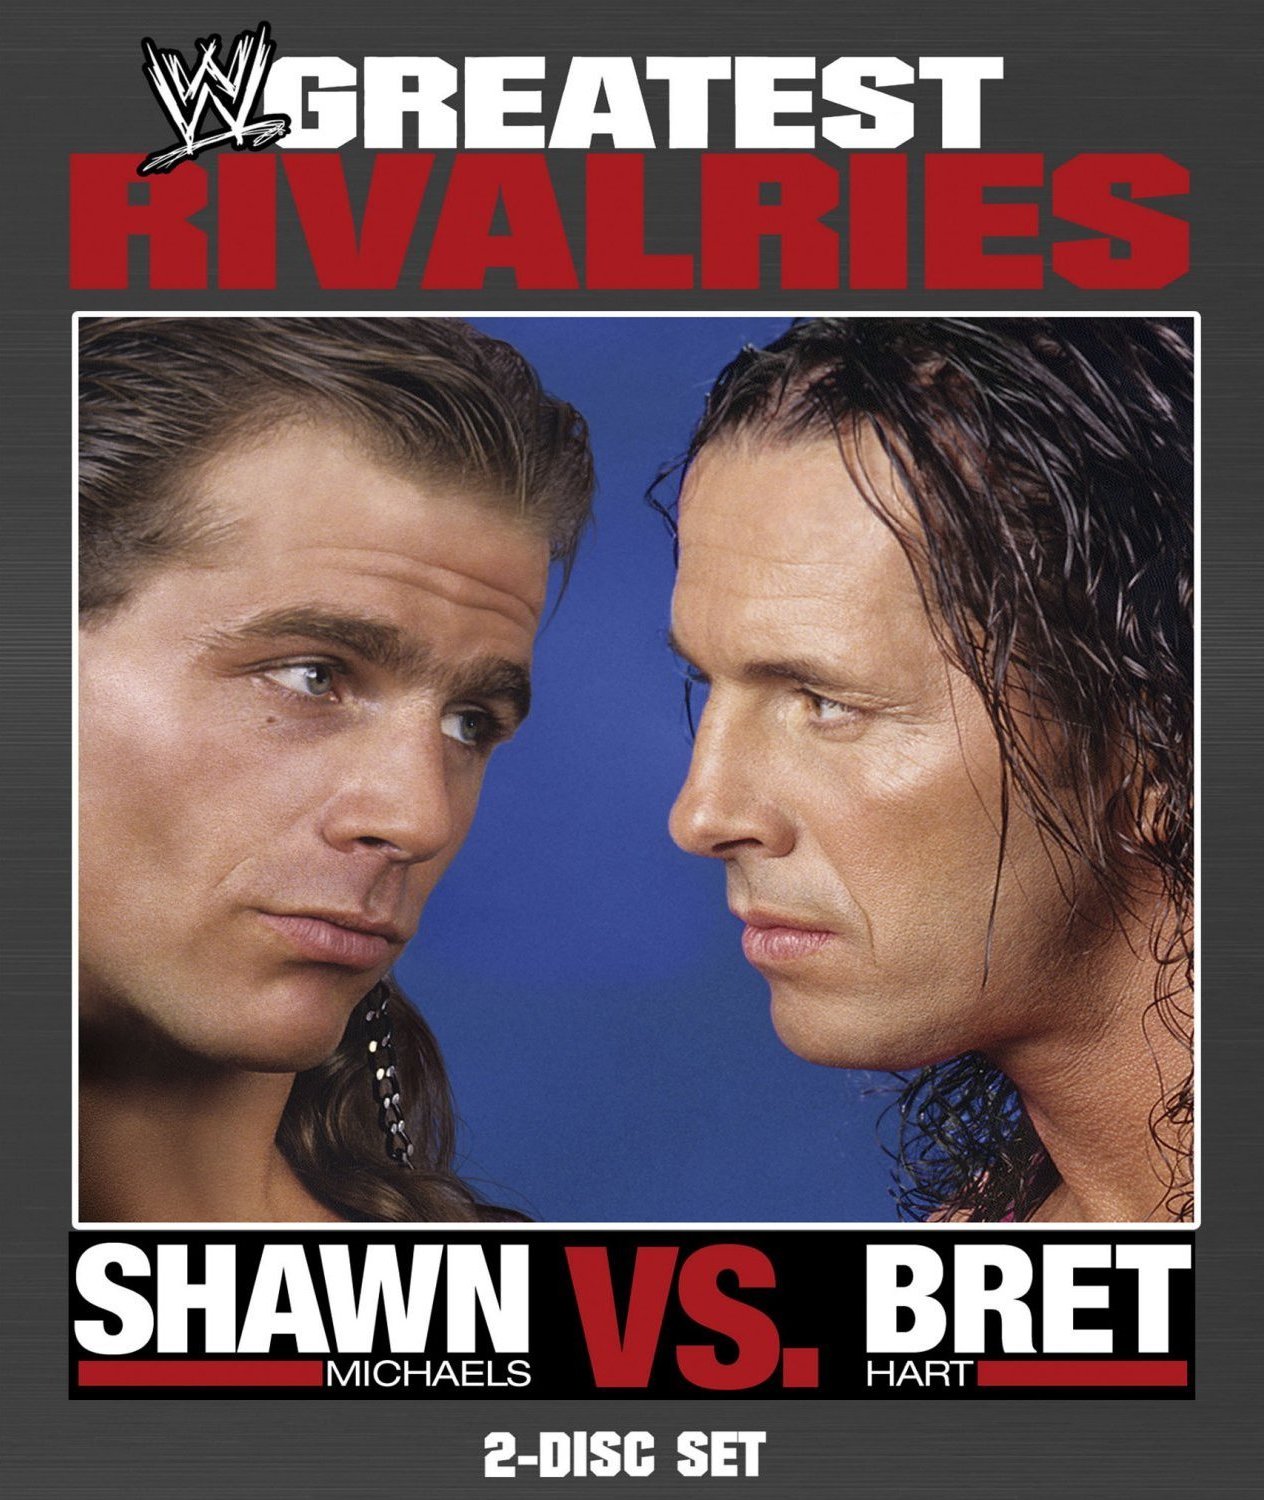 Title: Shawn Michaels Vs Bret Hart